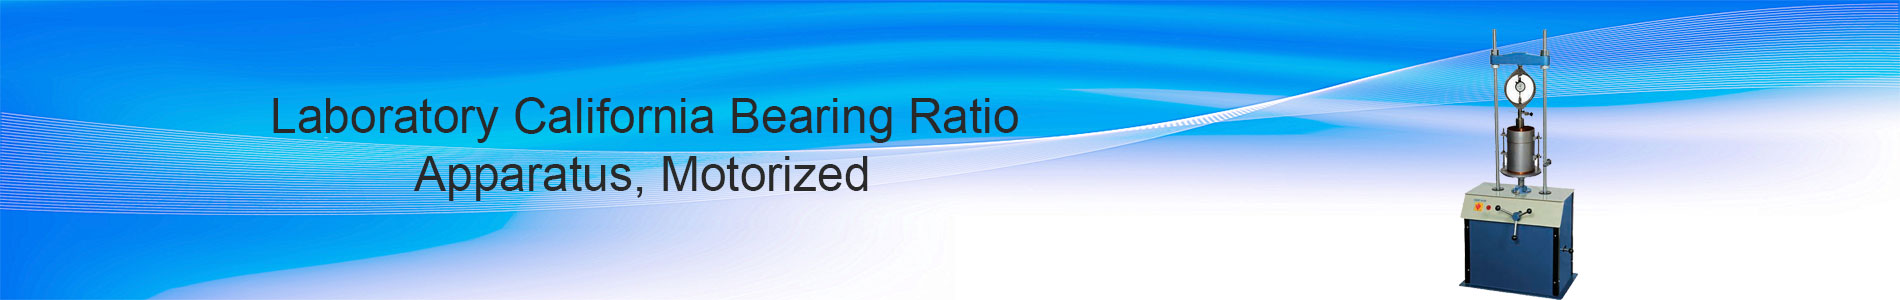 Laboratory California Bearing Ratio Apparatus Exporter India